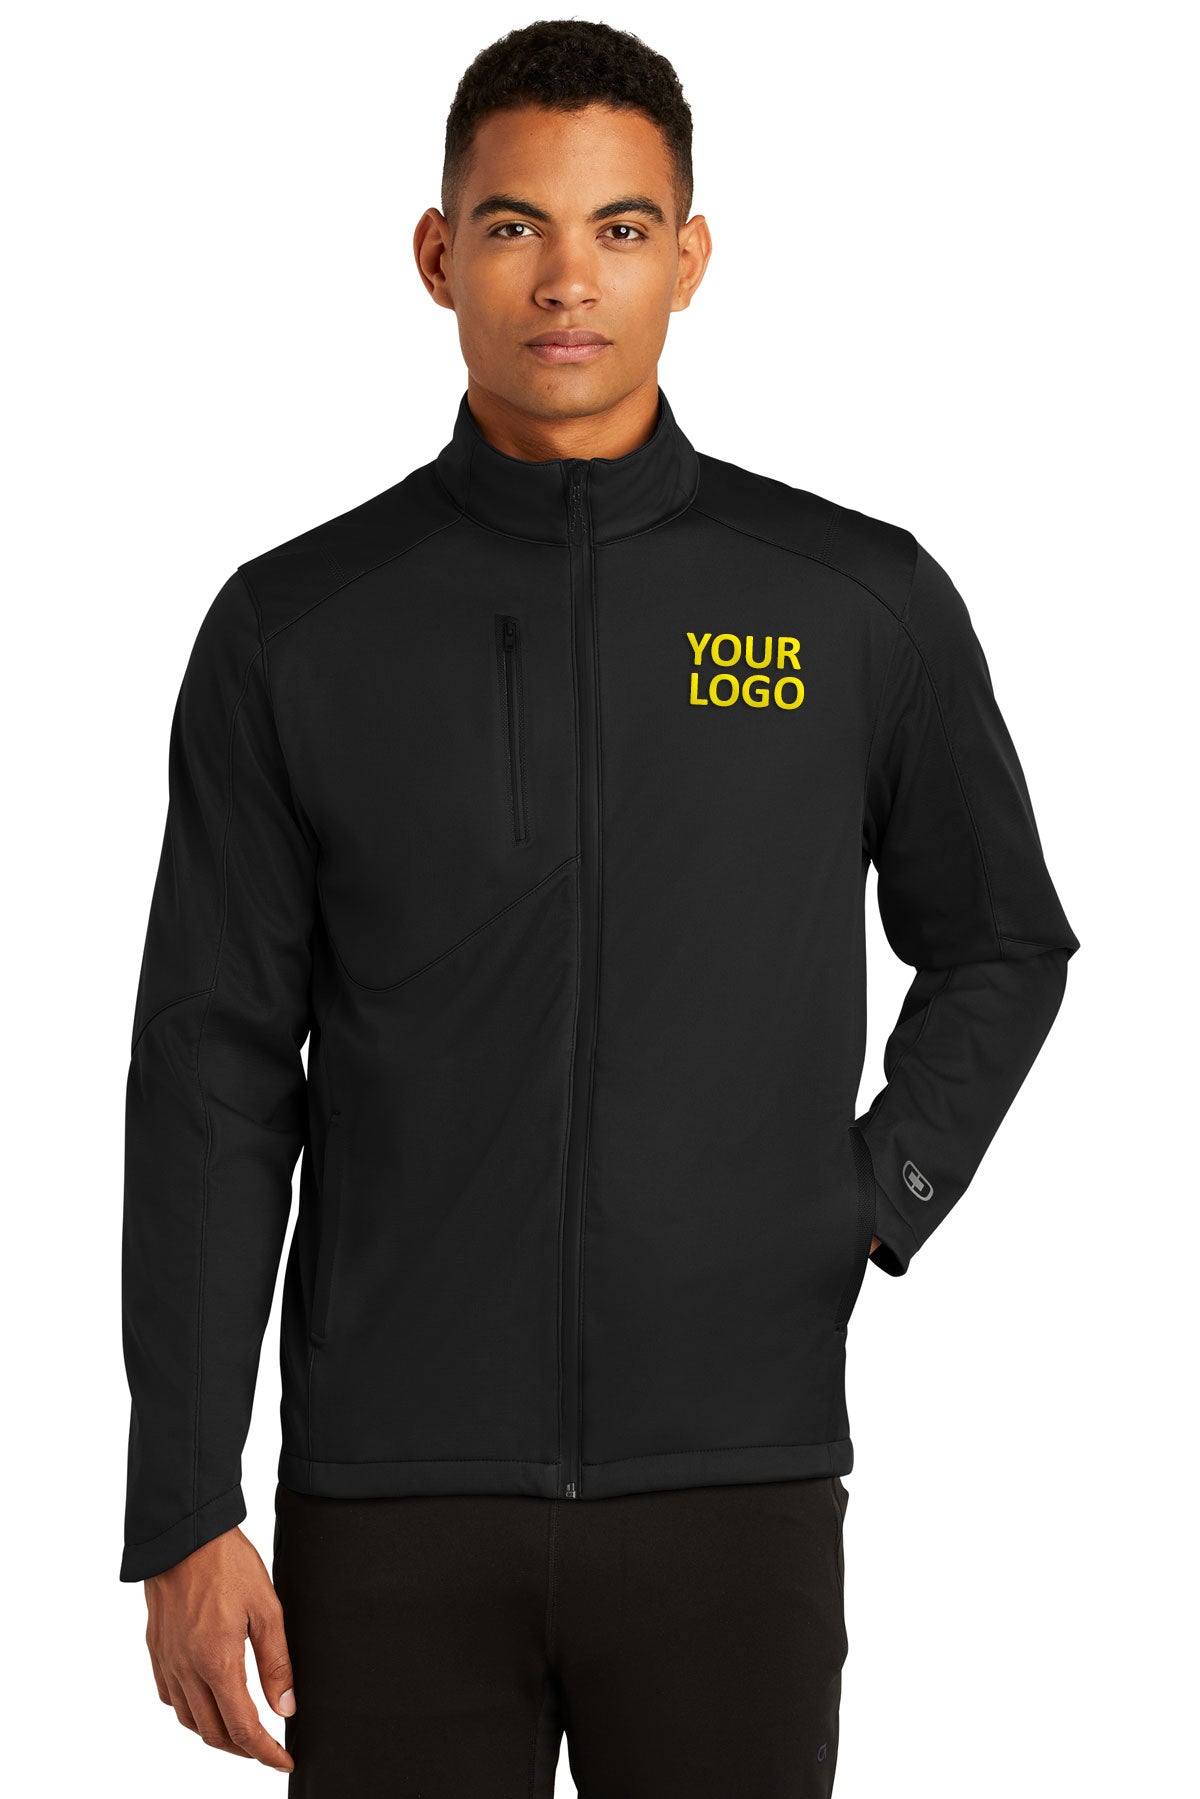 OGIO Endurance Blacktop OE720 company logo jackets